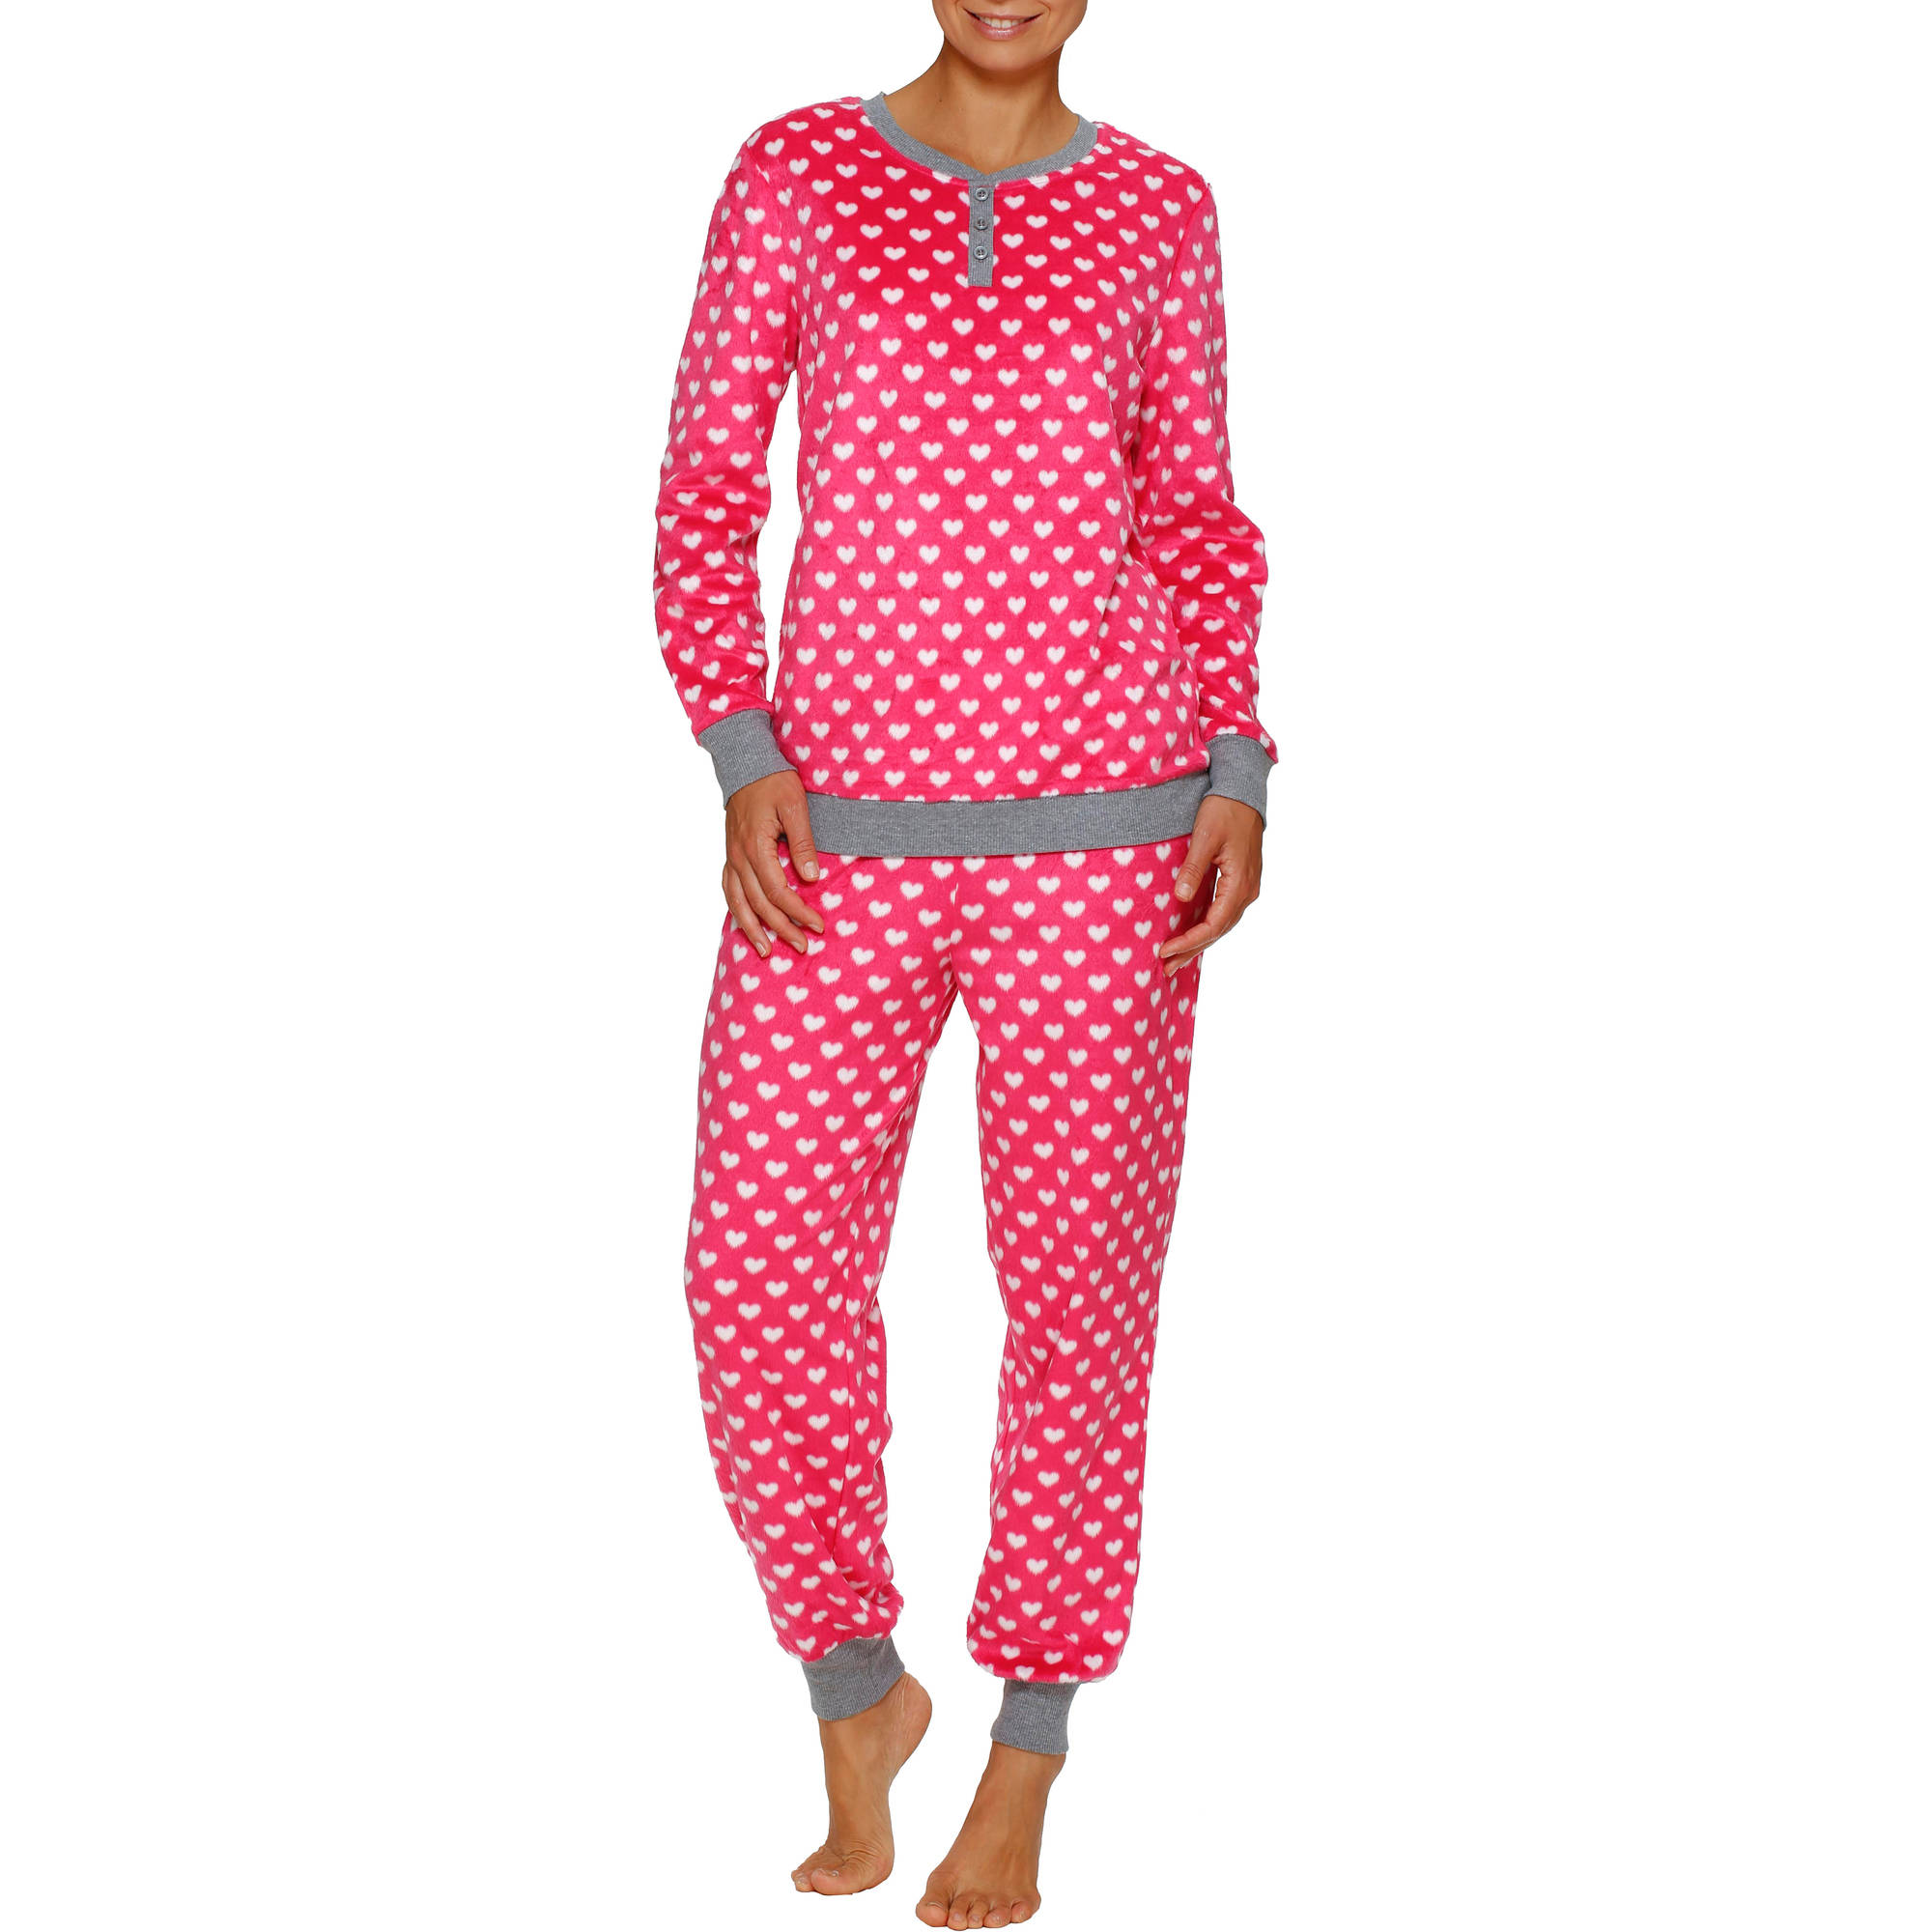 Women's Minky Fleece Long Sleeve Top and Ribbed Cuff Sleep Pant 2 Piece Giftable Pajama Set (Sizes S-3X) - image 1 of 3